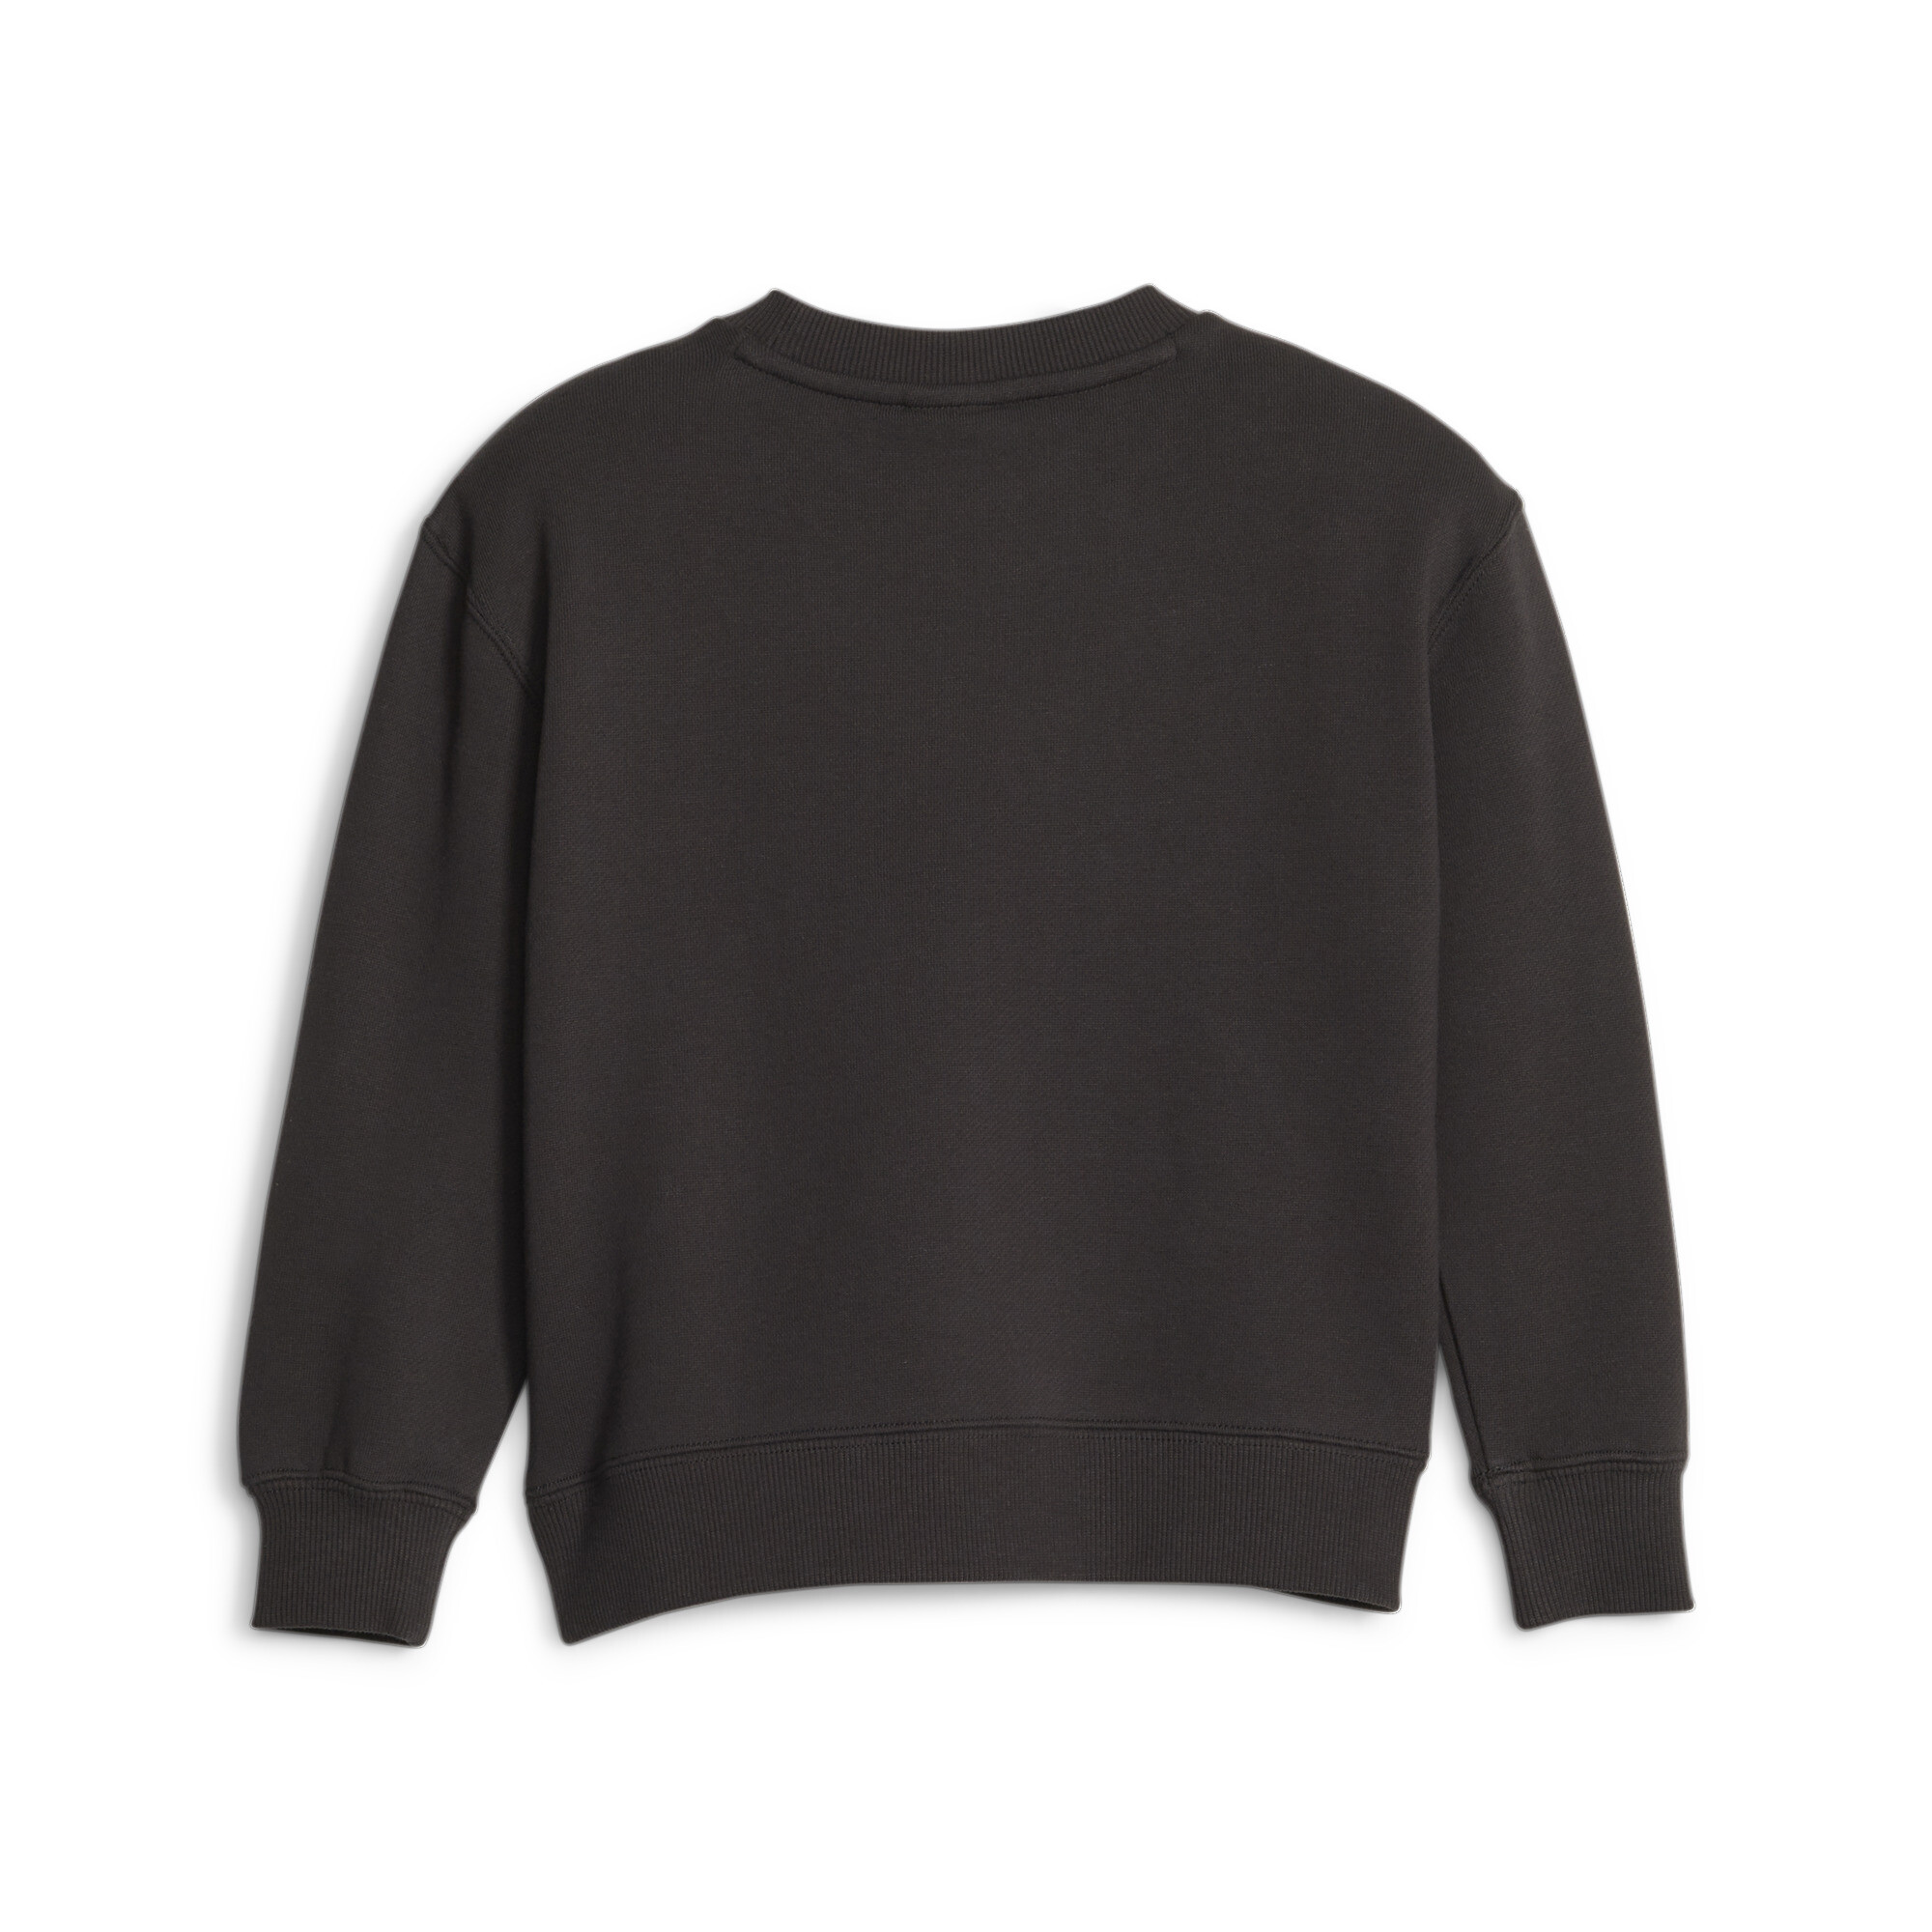 Puma X LIBERTY Kids' Sweatshirt, Black, Size 9-10Y, Clothing